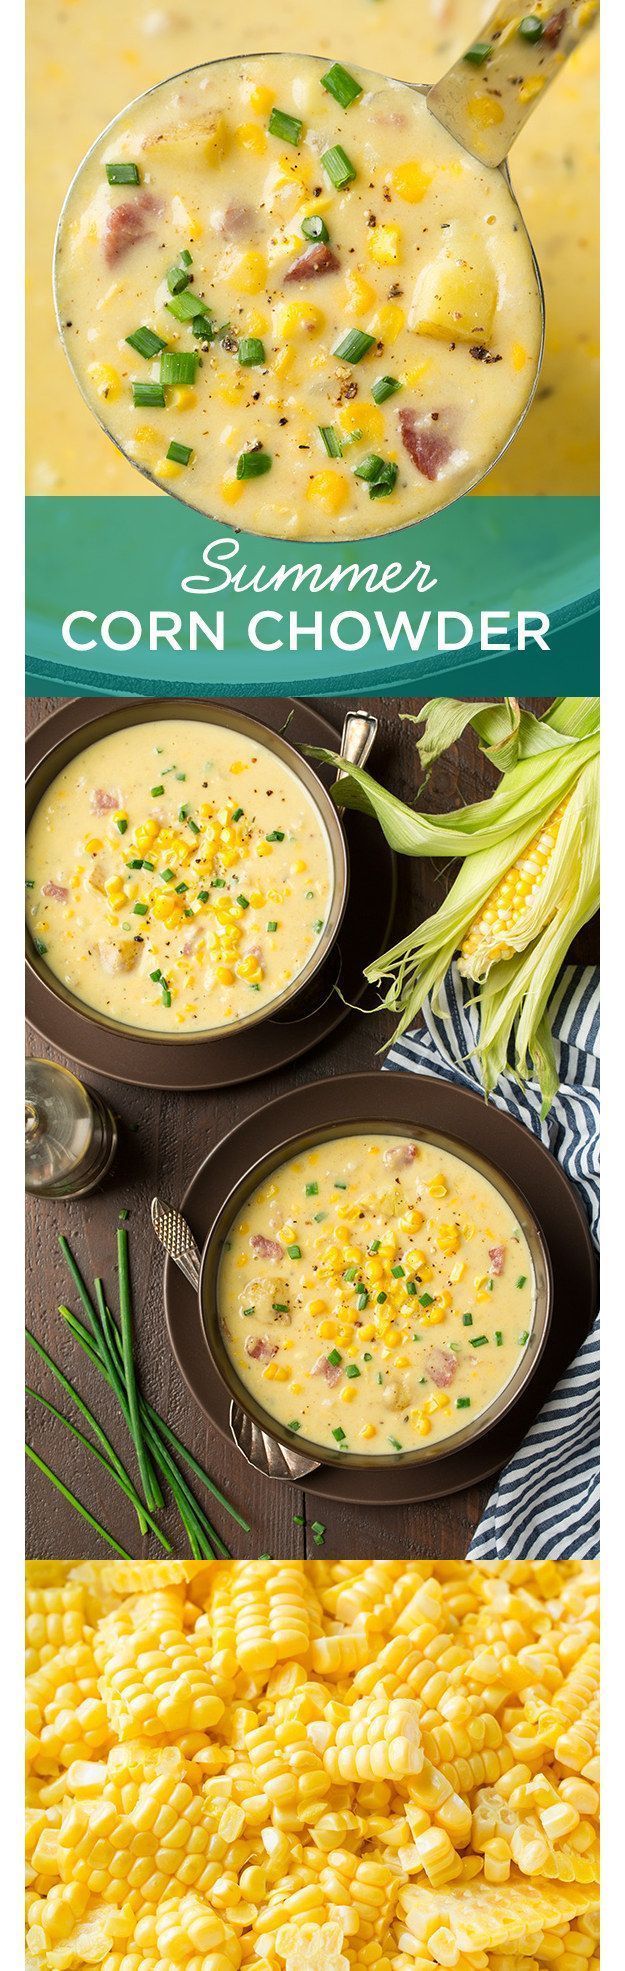 Summer Corn Chowder recipe.